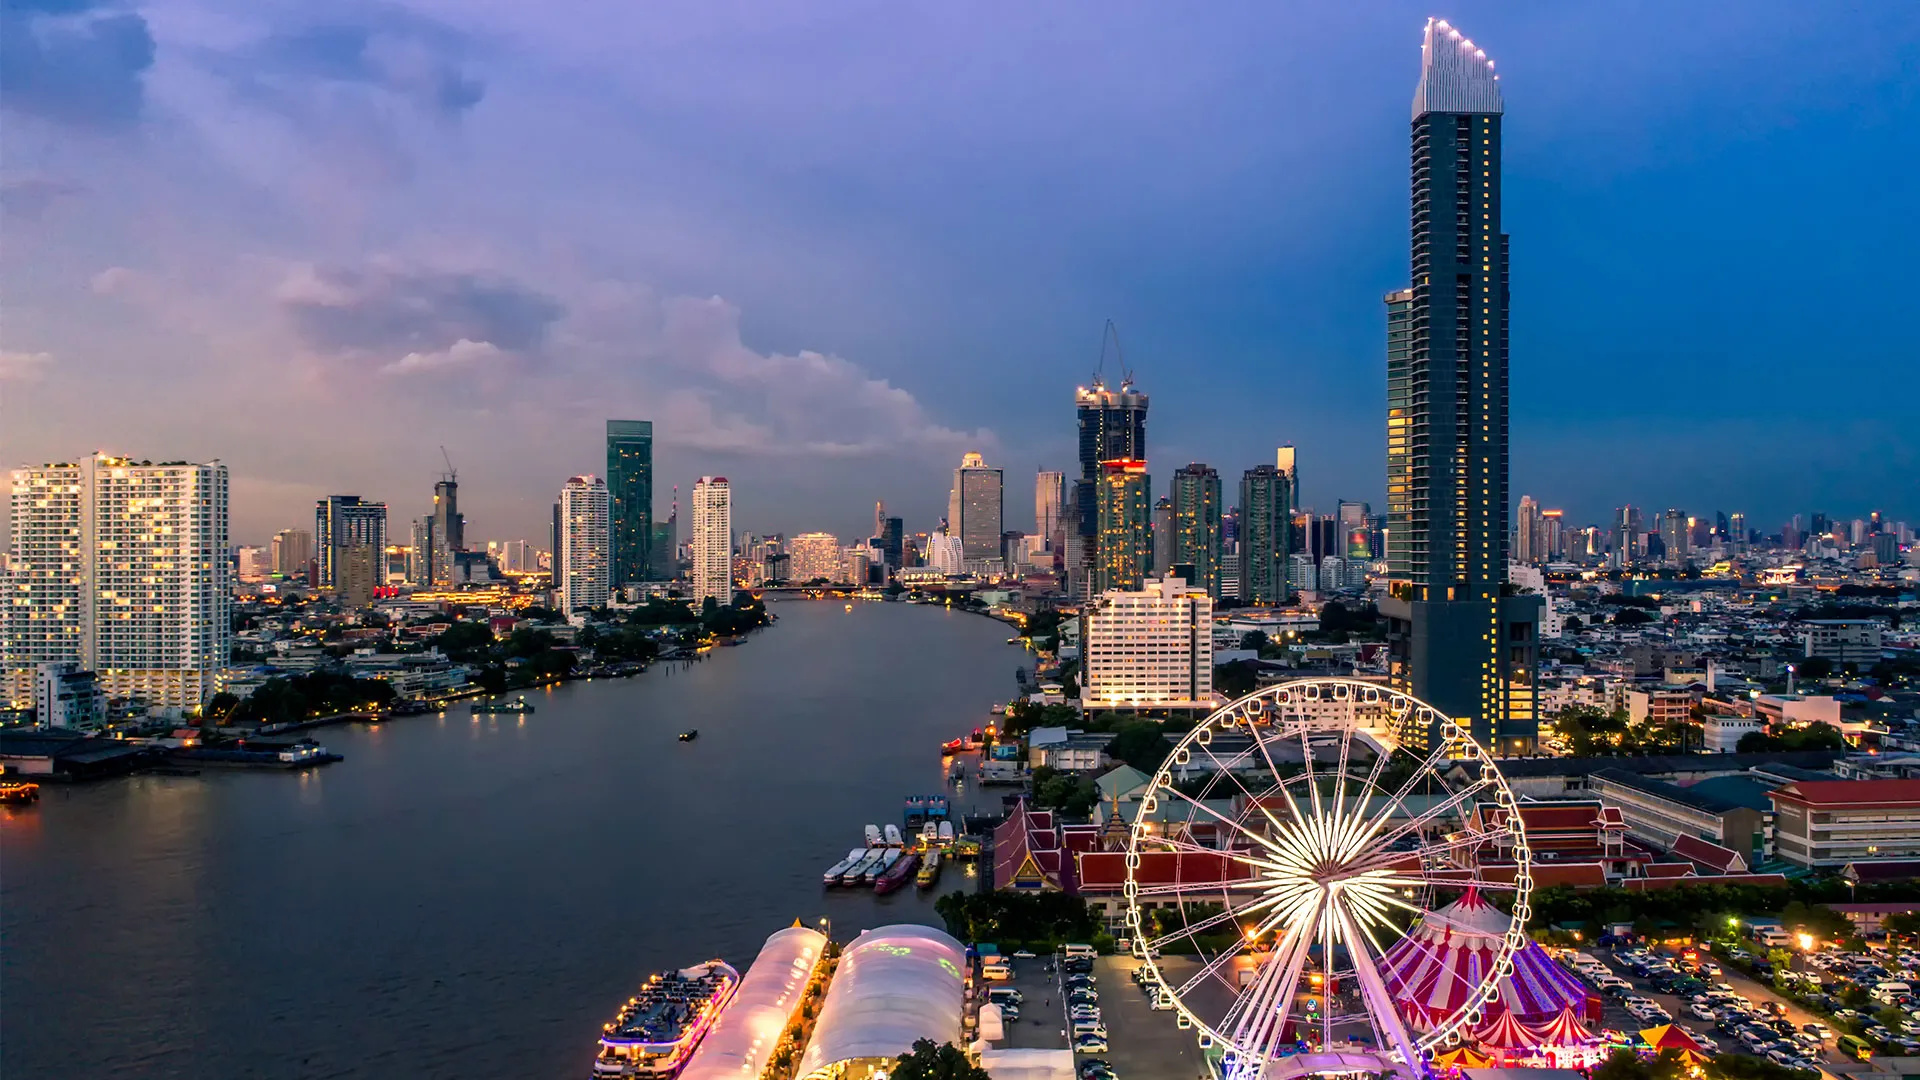 Bangkok: Asiatique: The Riverfront, Ferris wheel. 1920x1080 Full HD Wallpaper.